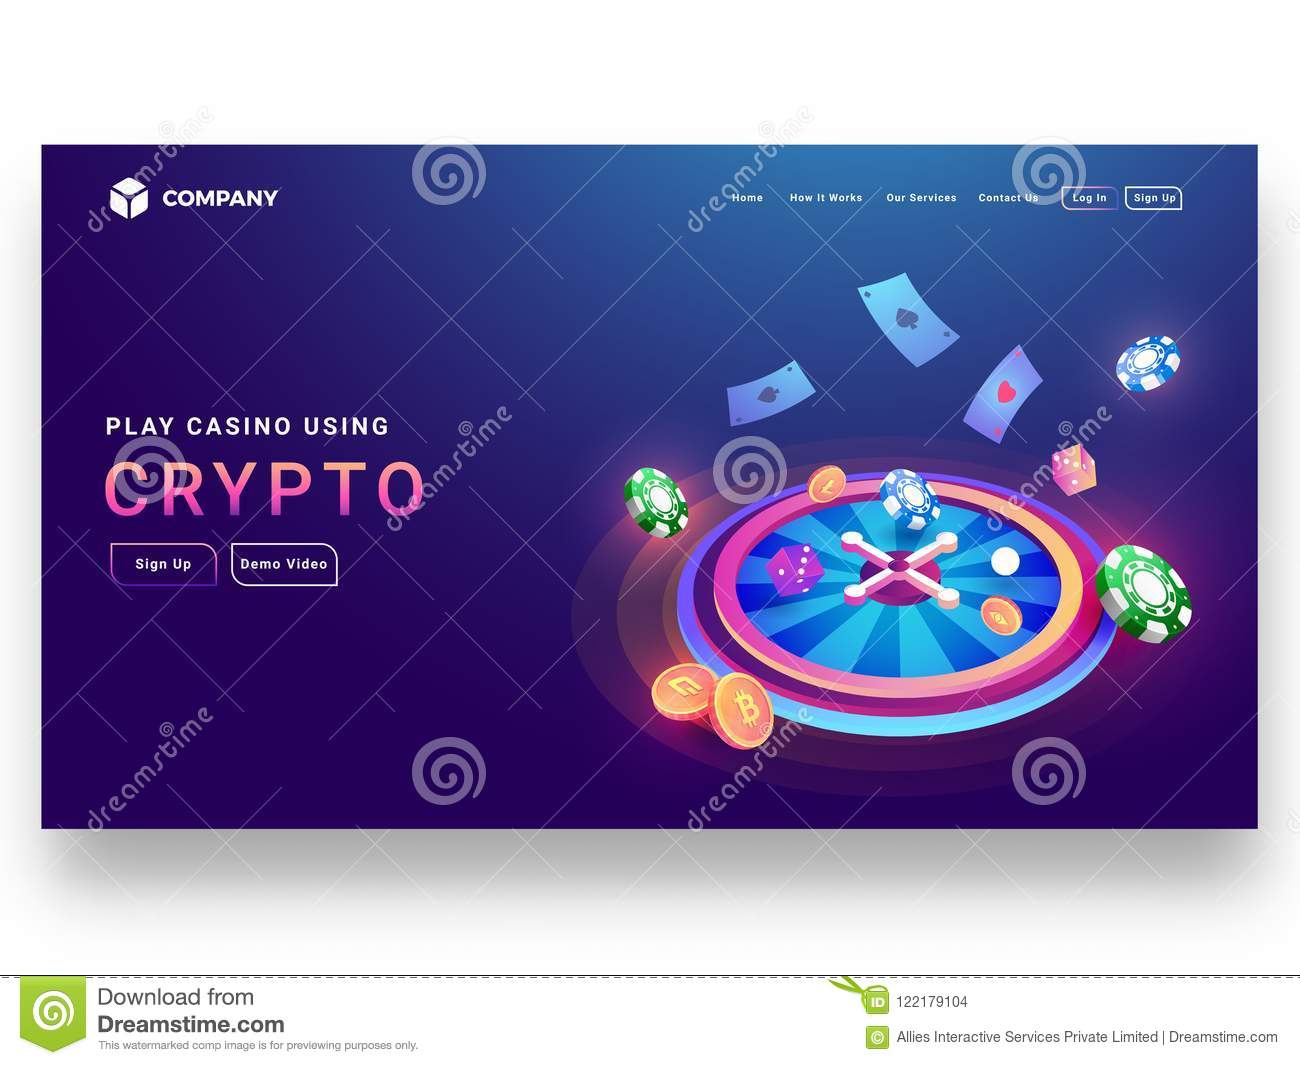 Bitcoin casino no deposit bonus uk